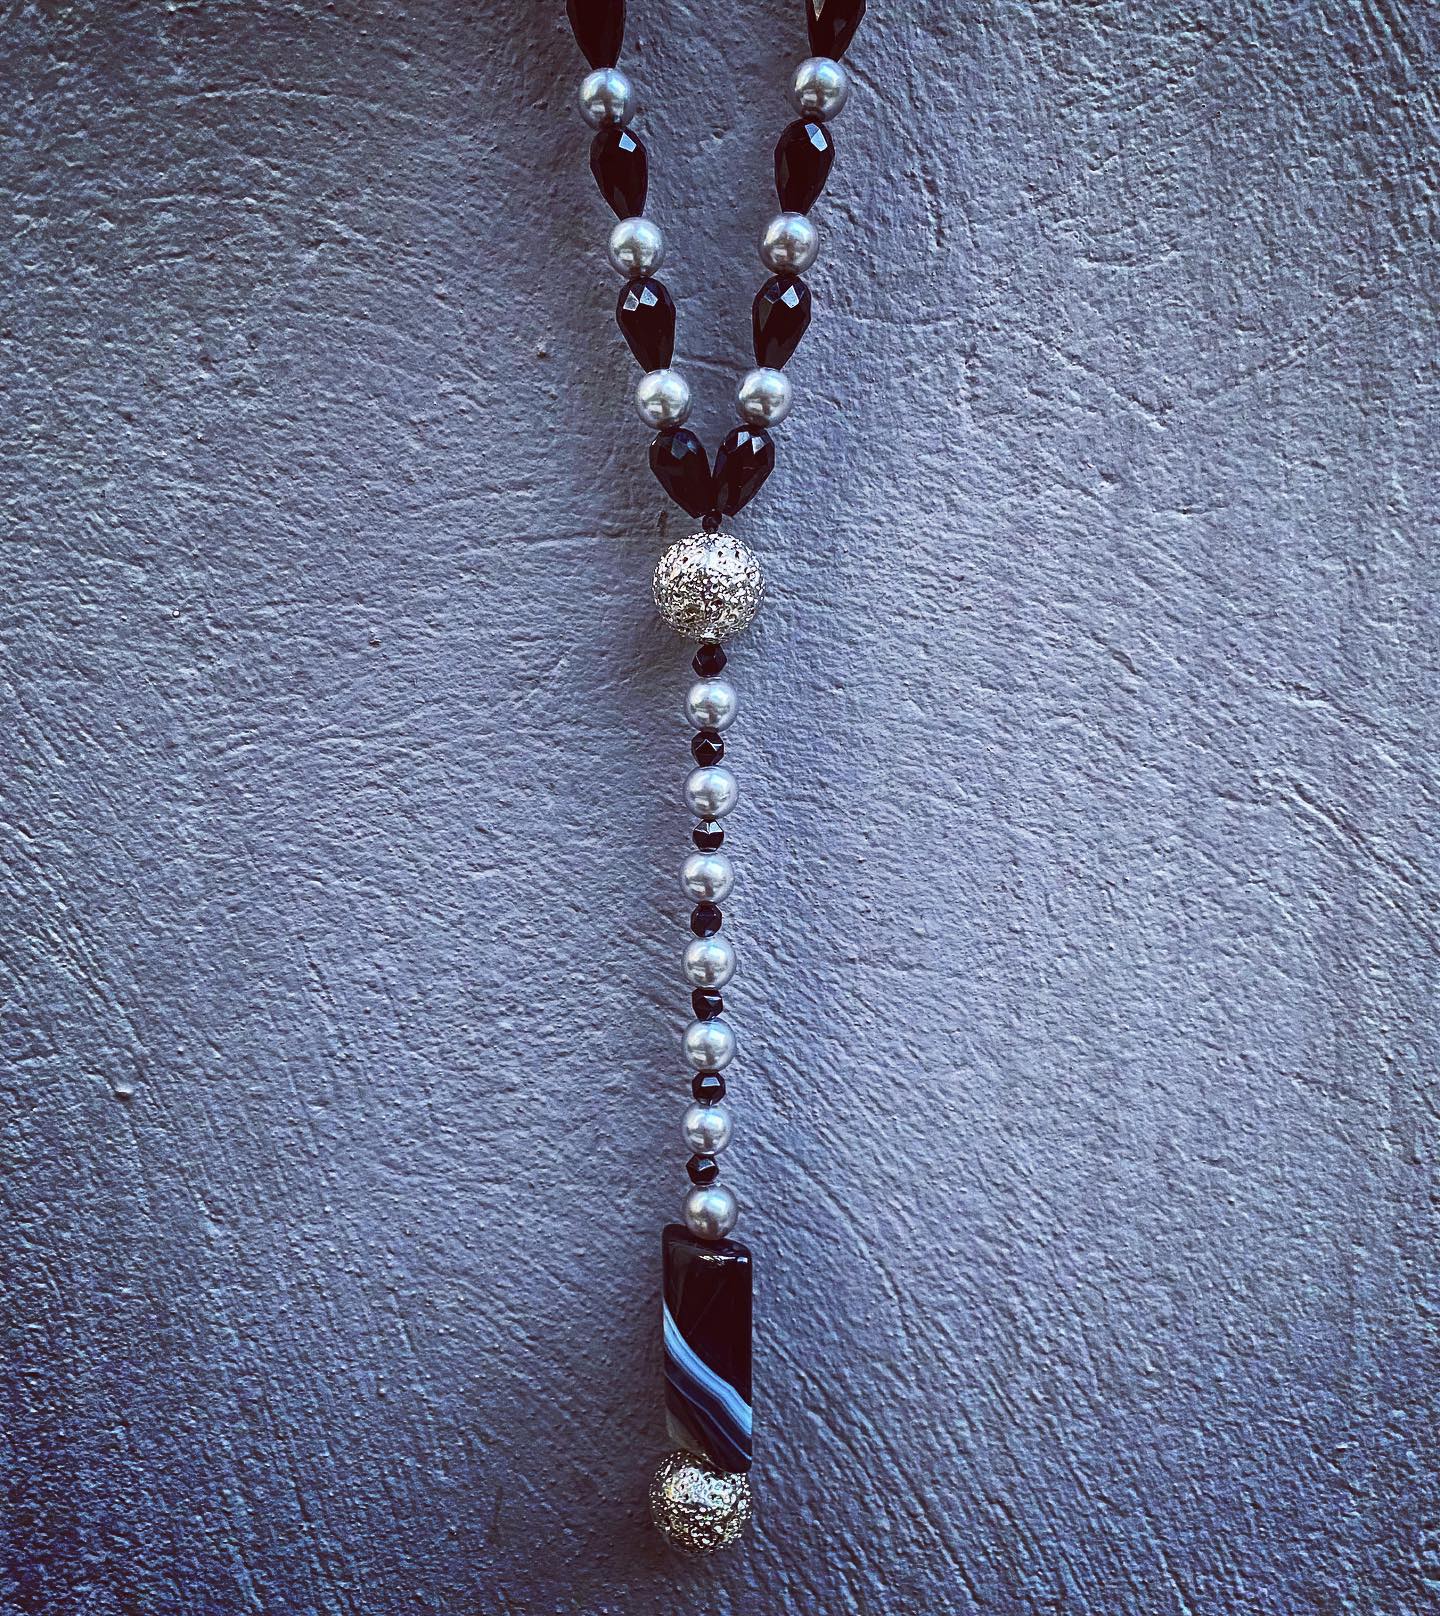 FWcollection2022/23#mariatsaousi_com #mariatsaousi.com#collection#necklace by mariatsaousi.com#stayhome #staysafe #summervibes #summercollection #newcollection #necklaces #handmadejewelry #earrings#semiprecious stones#
mariatsaousi_com#